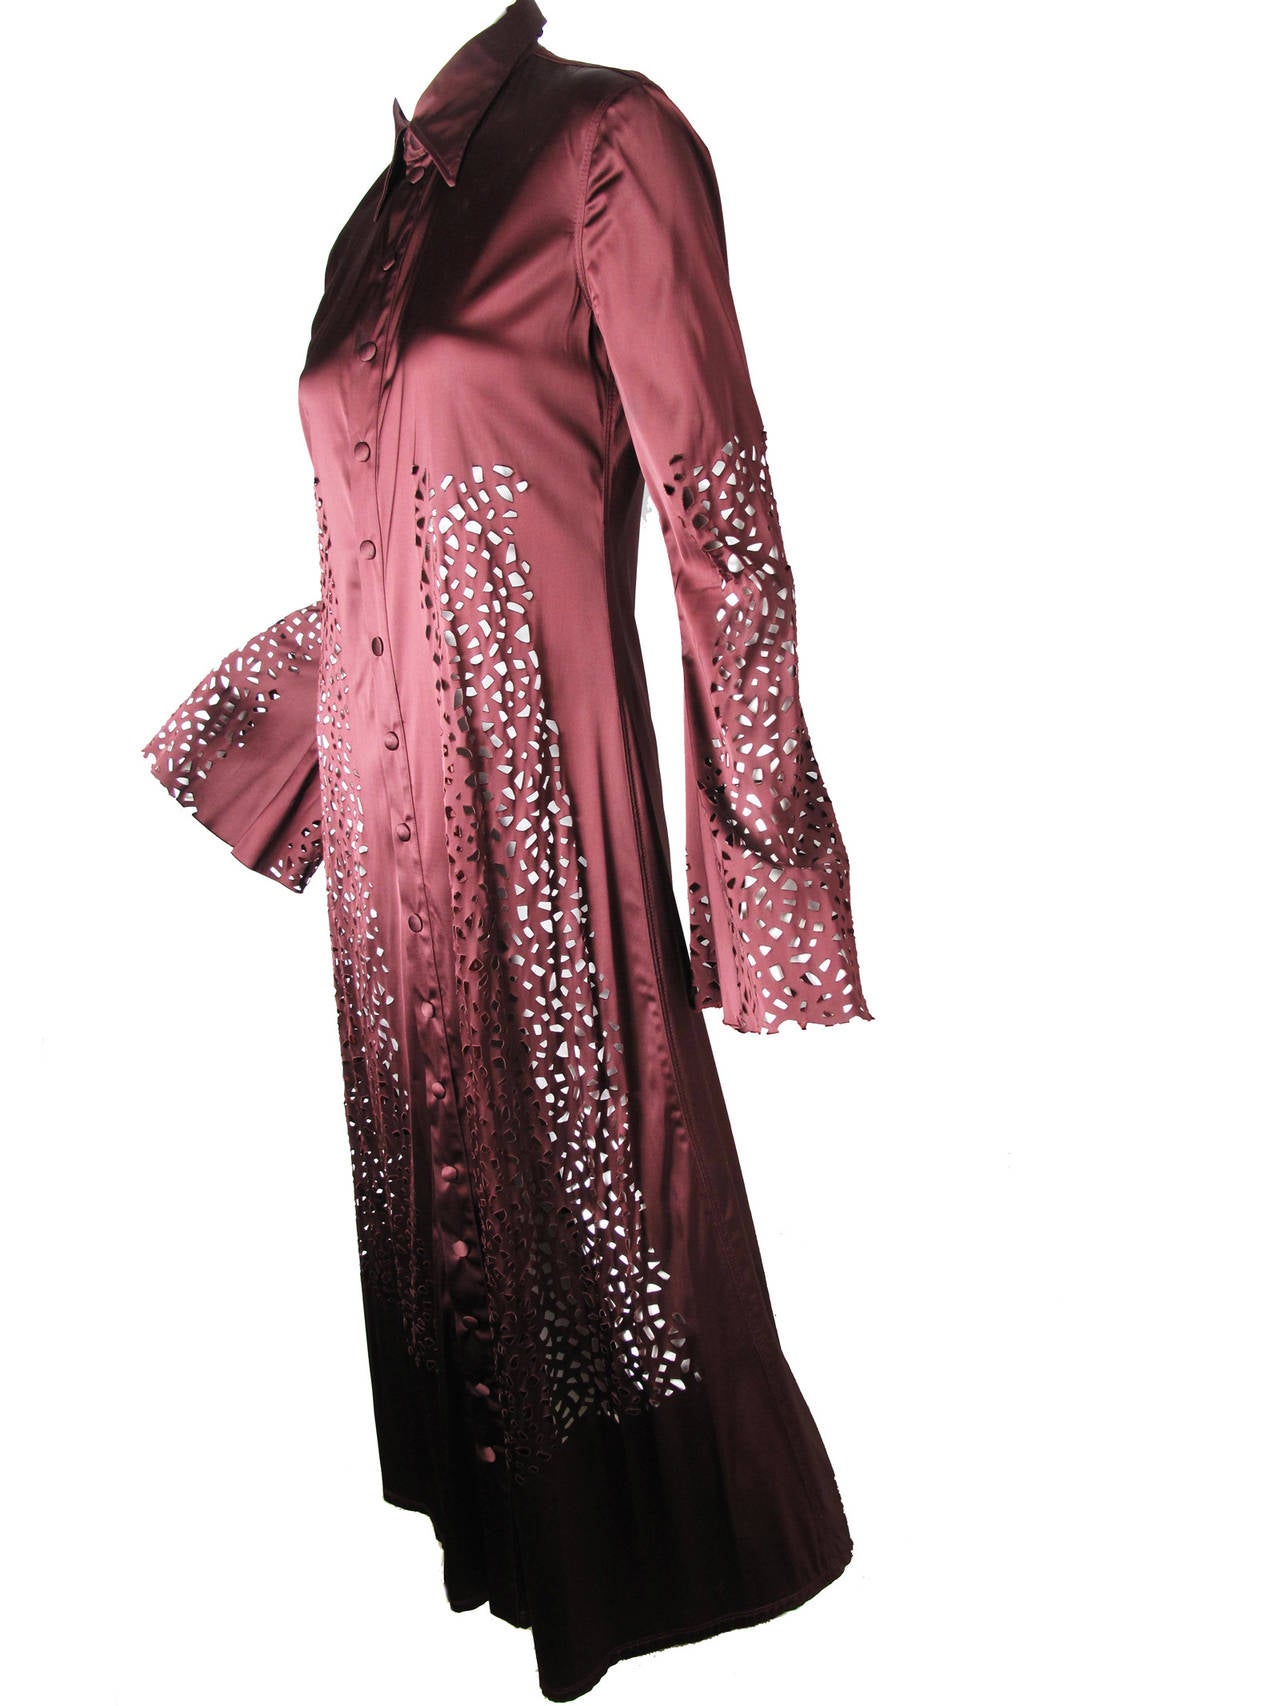 Jean Paul Gaultier maroon laser cut rayon, spandex dress. Buttons down front. 36